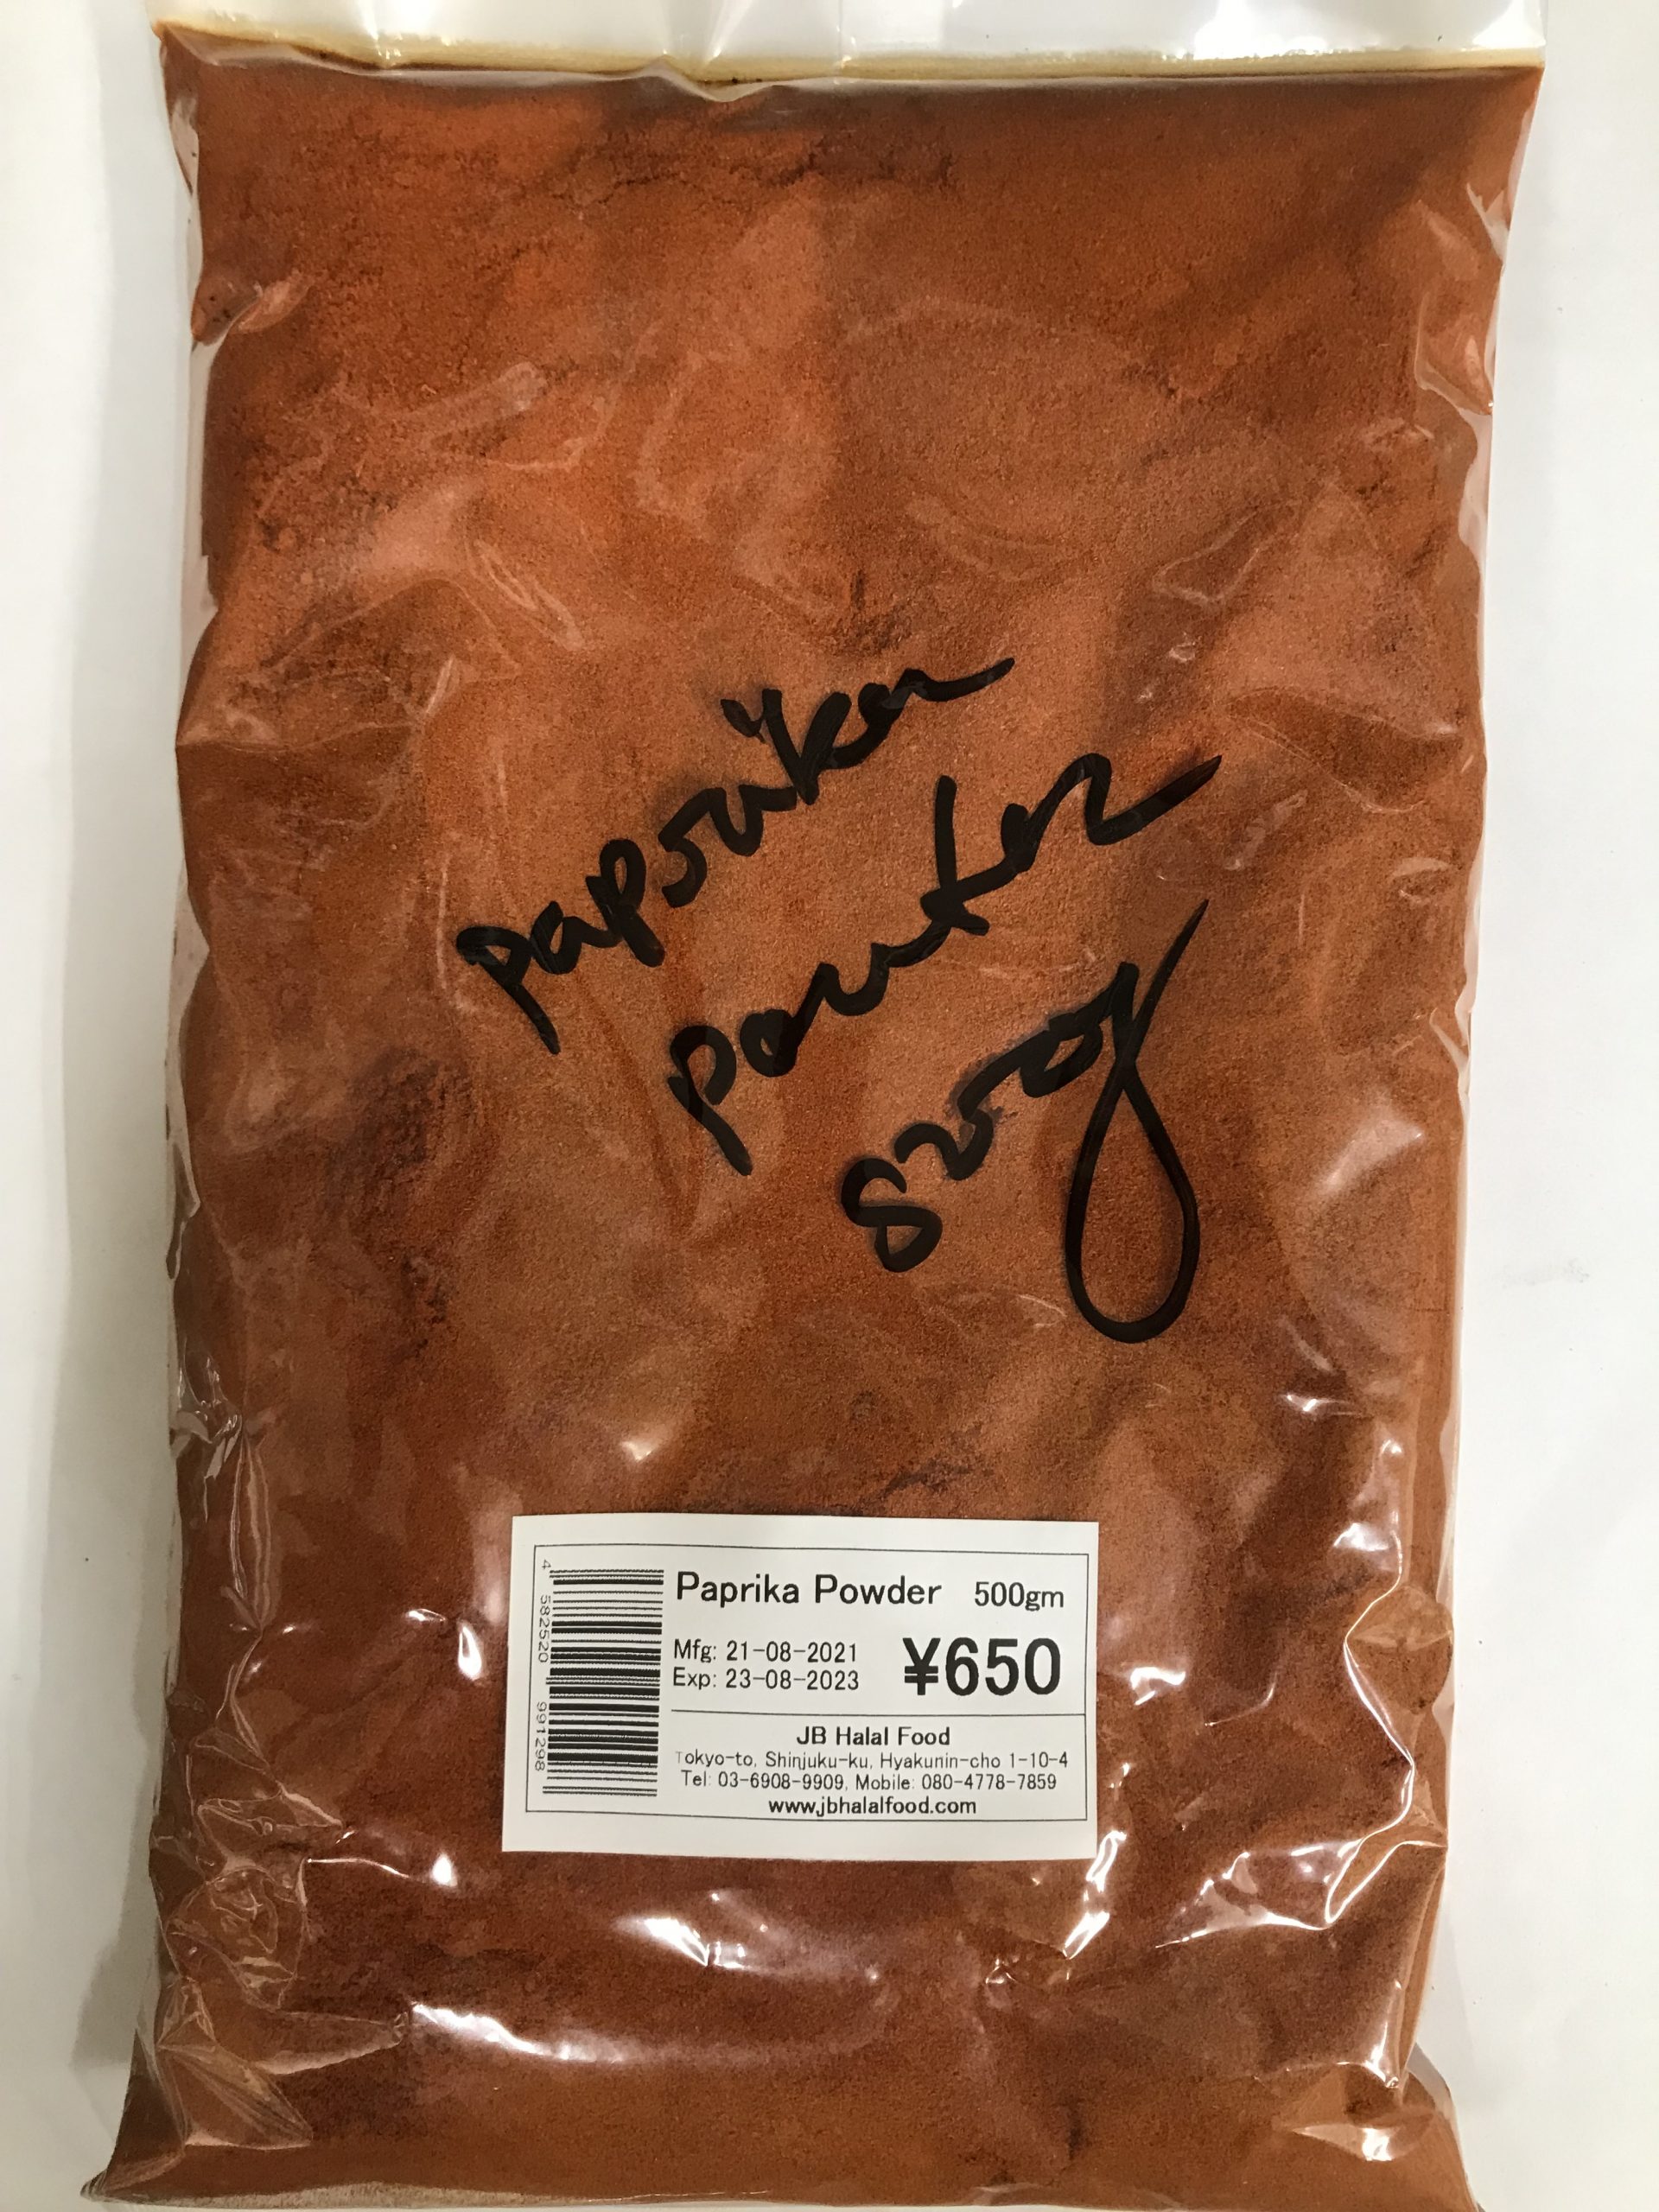 Paprika Powderパプリカパウダー 500gm – Welcome to JB HALAL Food 